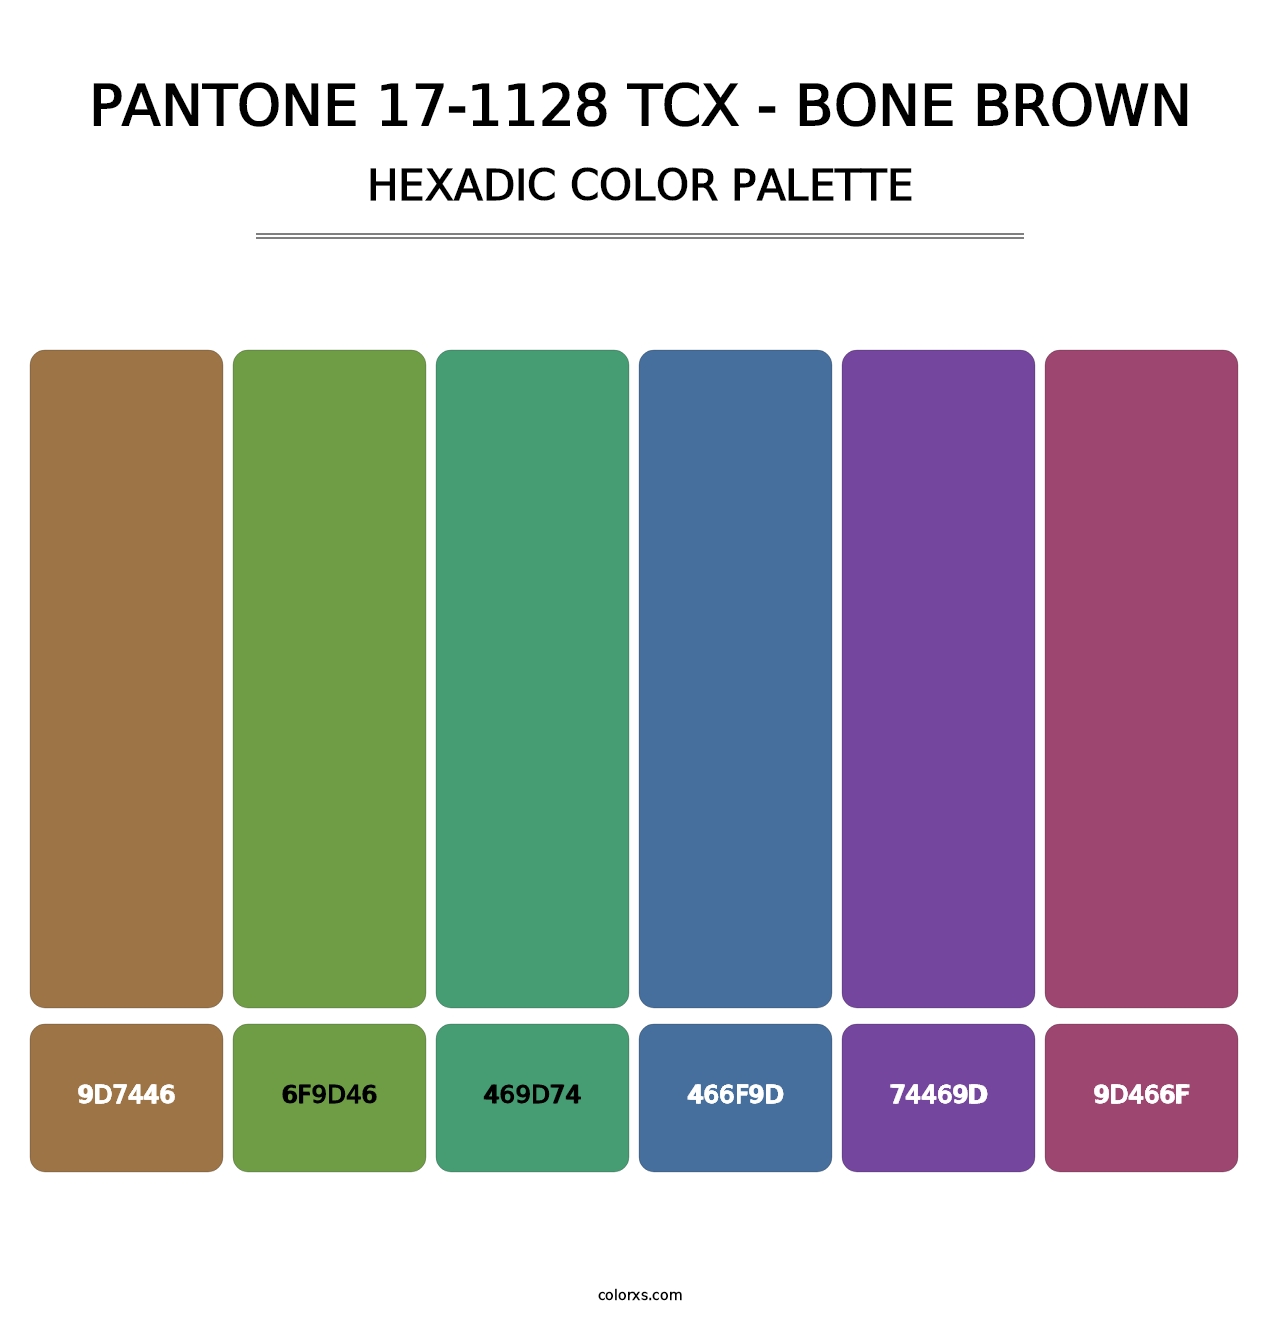 PANTONE 17-1128 TCX - Bone Brown - Hexadic Color Palette